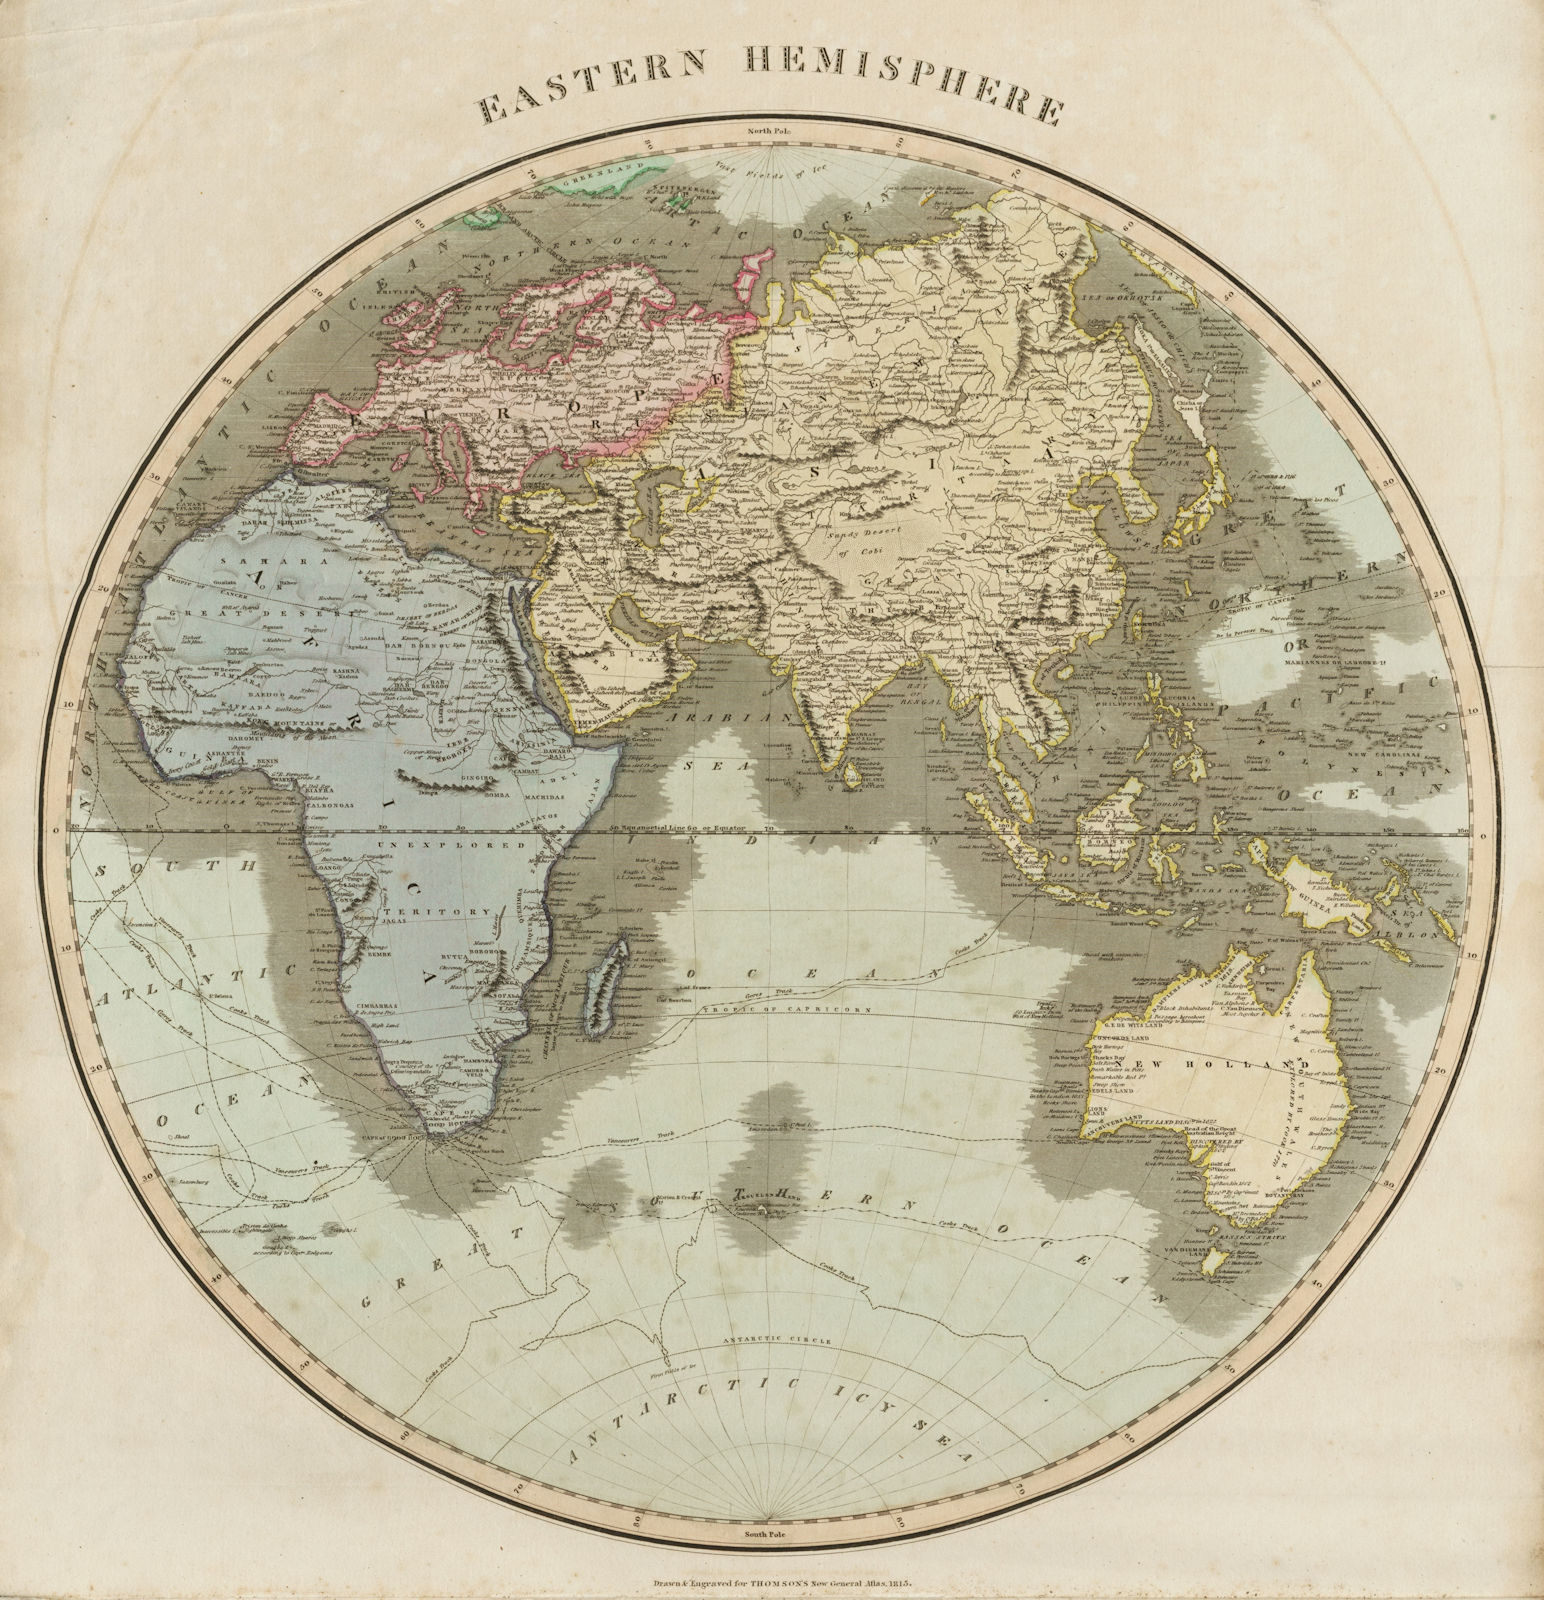 Associate Product "Eastern hemisphere". Europe Africa Asia Australasia. THOMSON 1817 old map